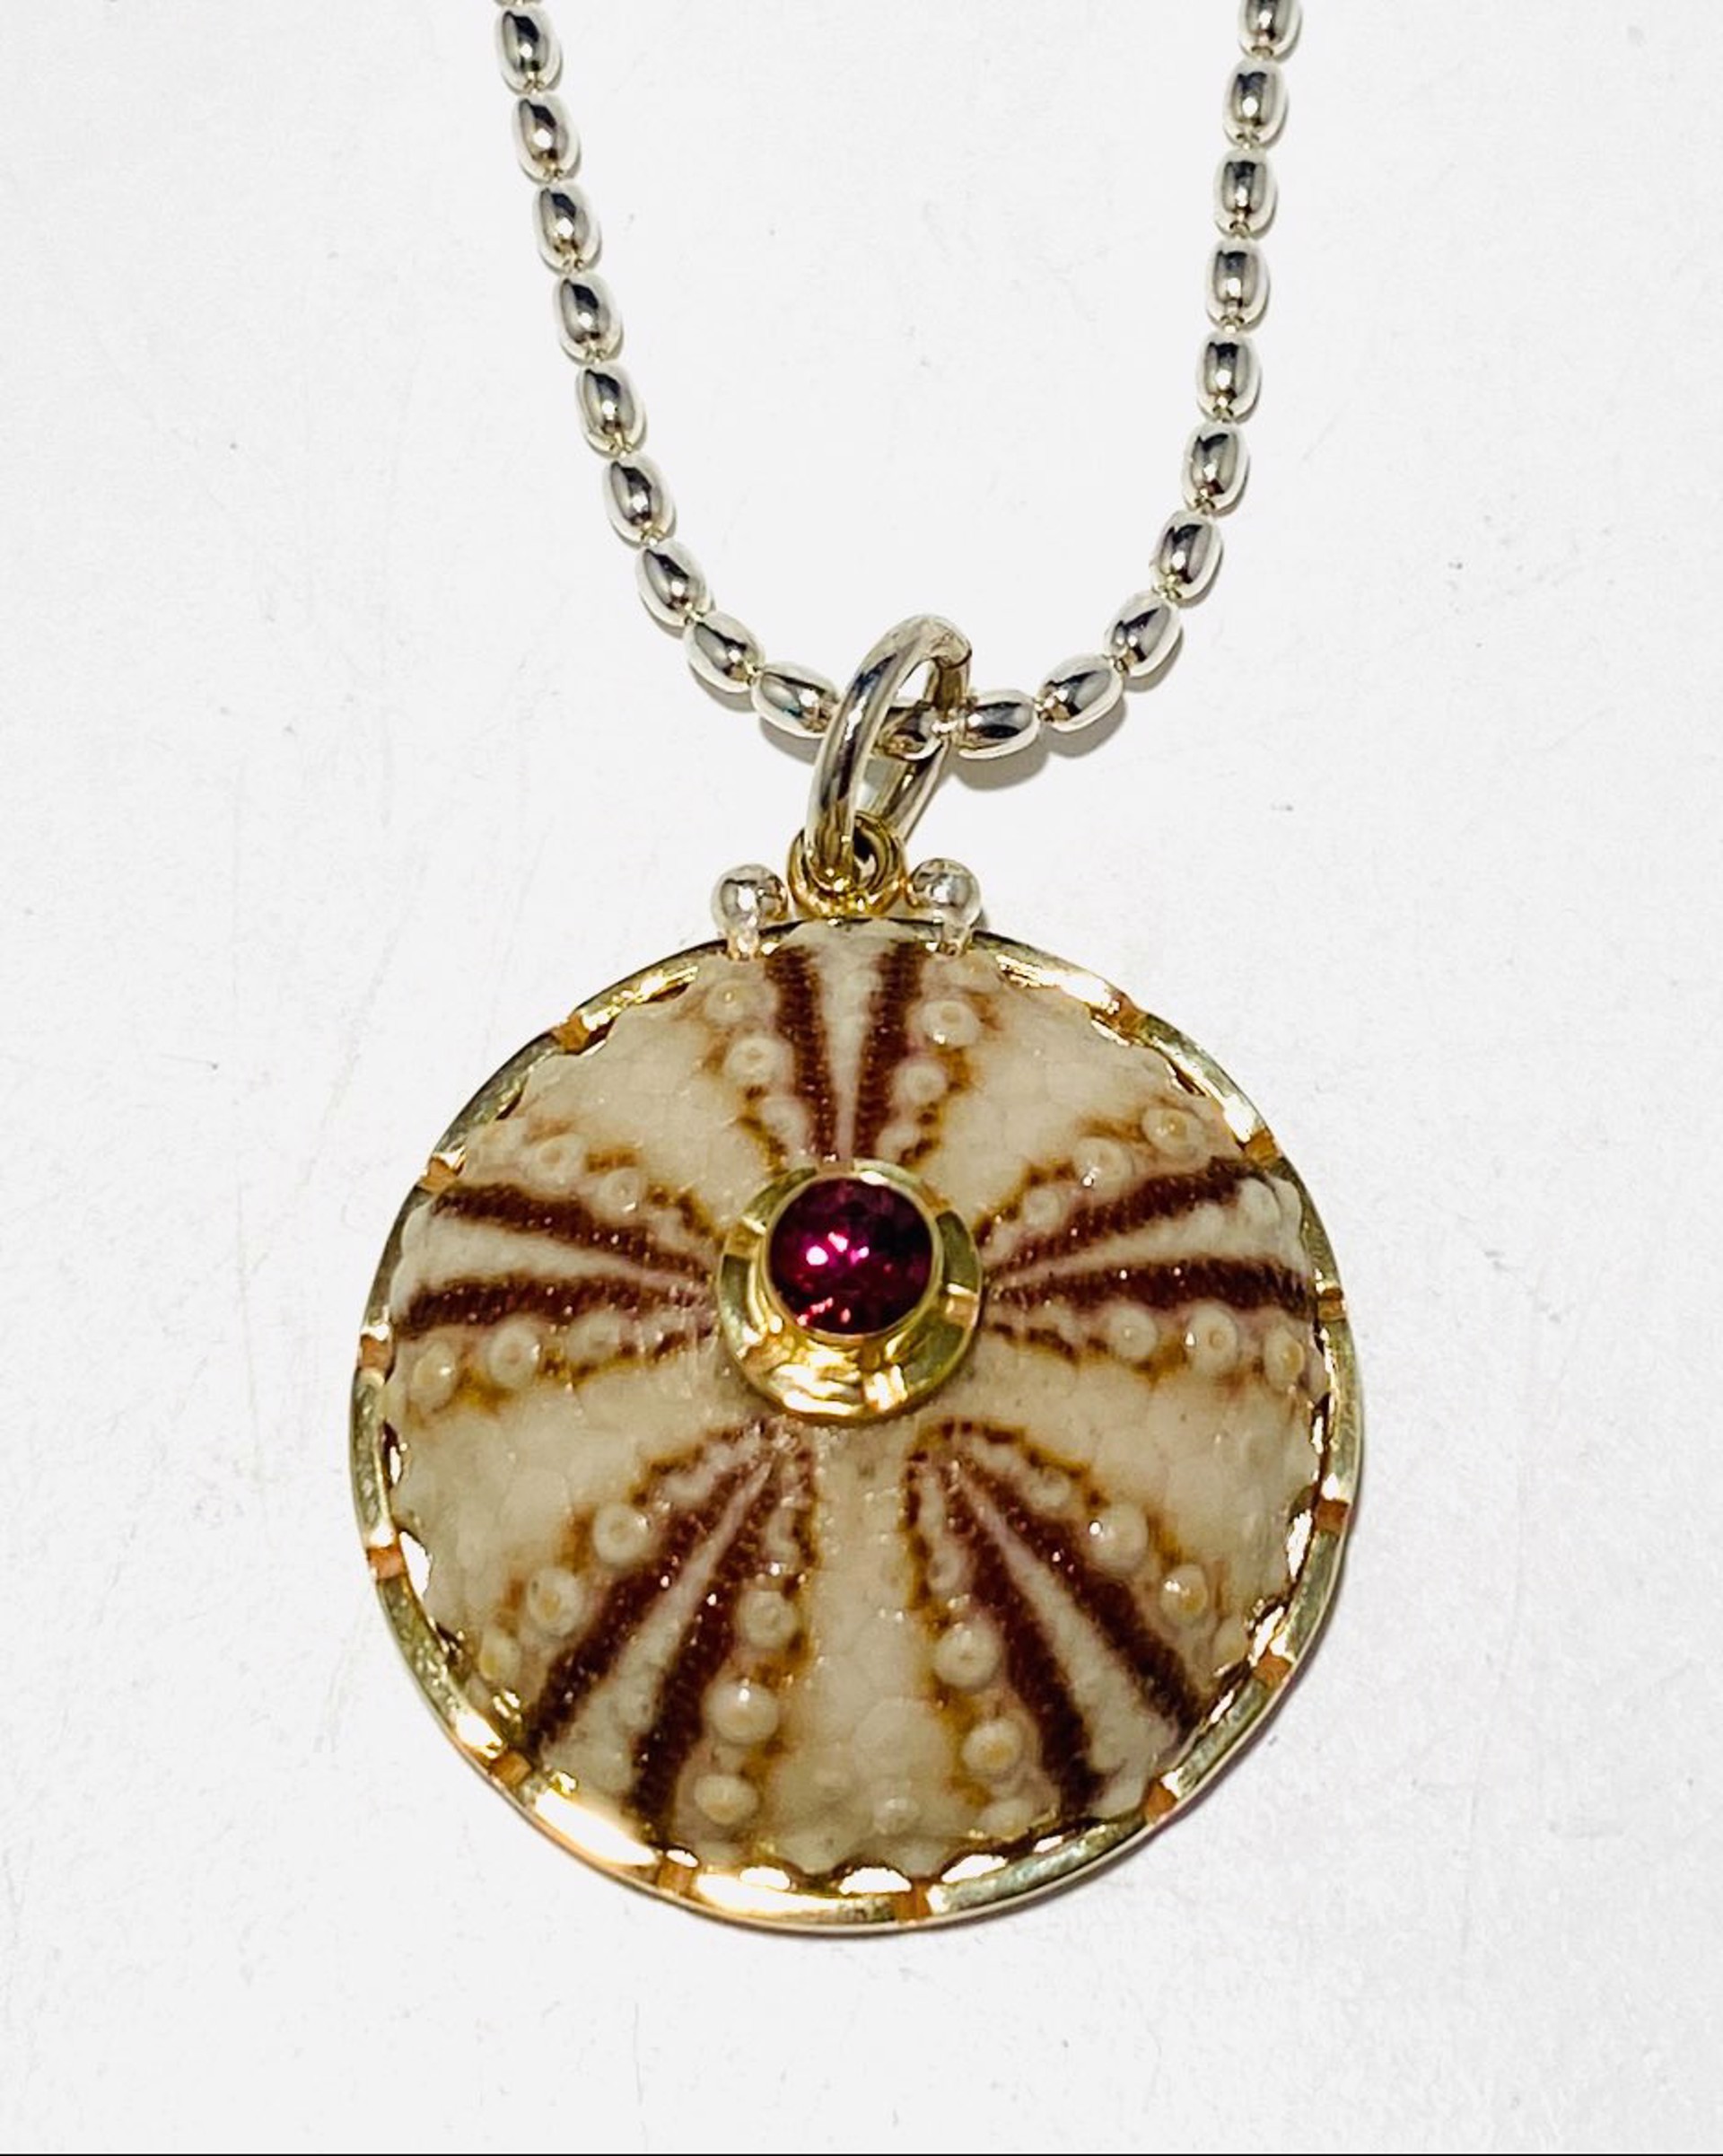 Pawleys Island Sea Urchin With Rhodolite Garnet Pendant on 16" Silver Rice Chain Necklace BU23-3 by Barbara Umbel